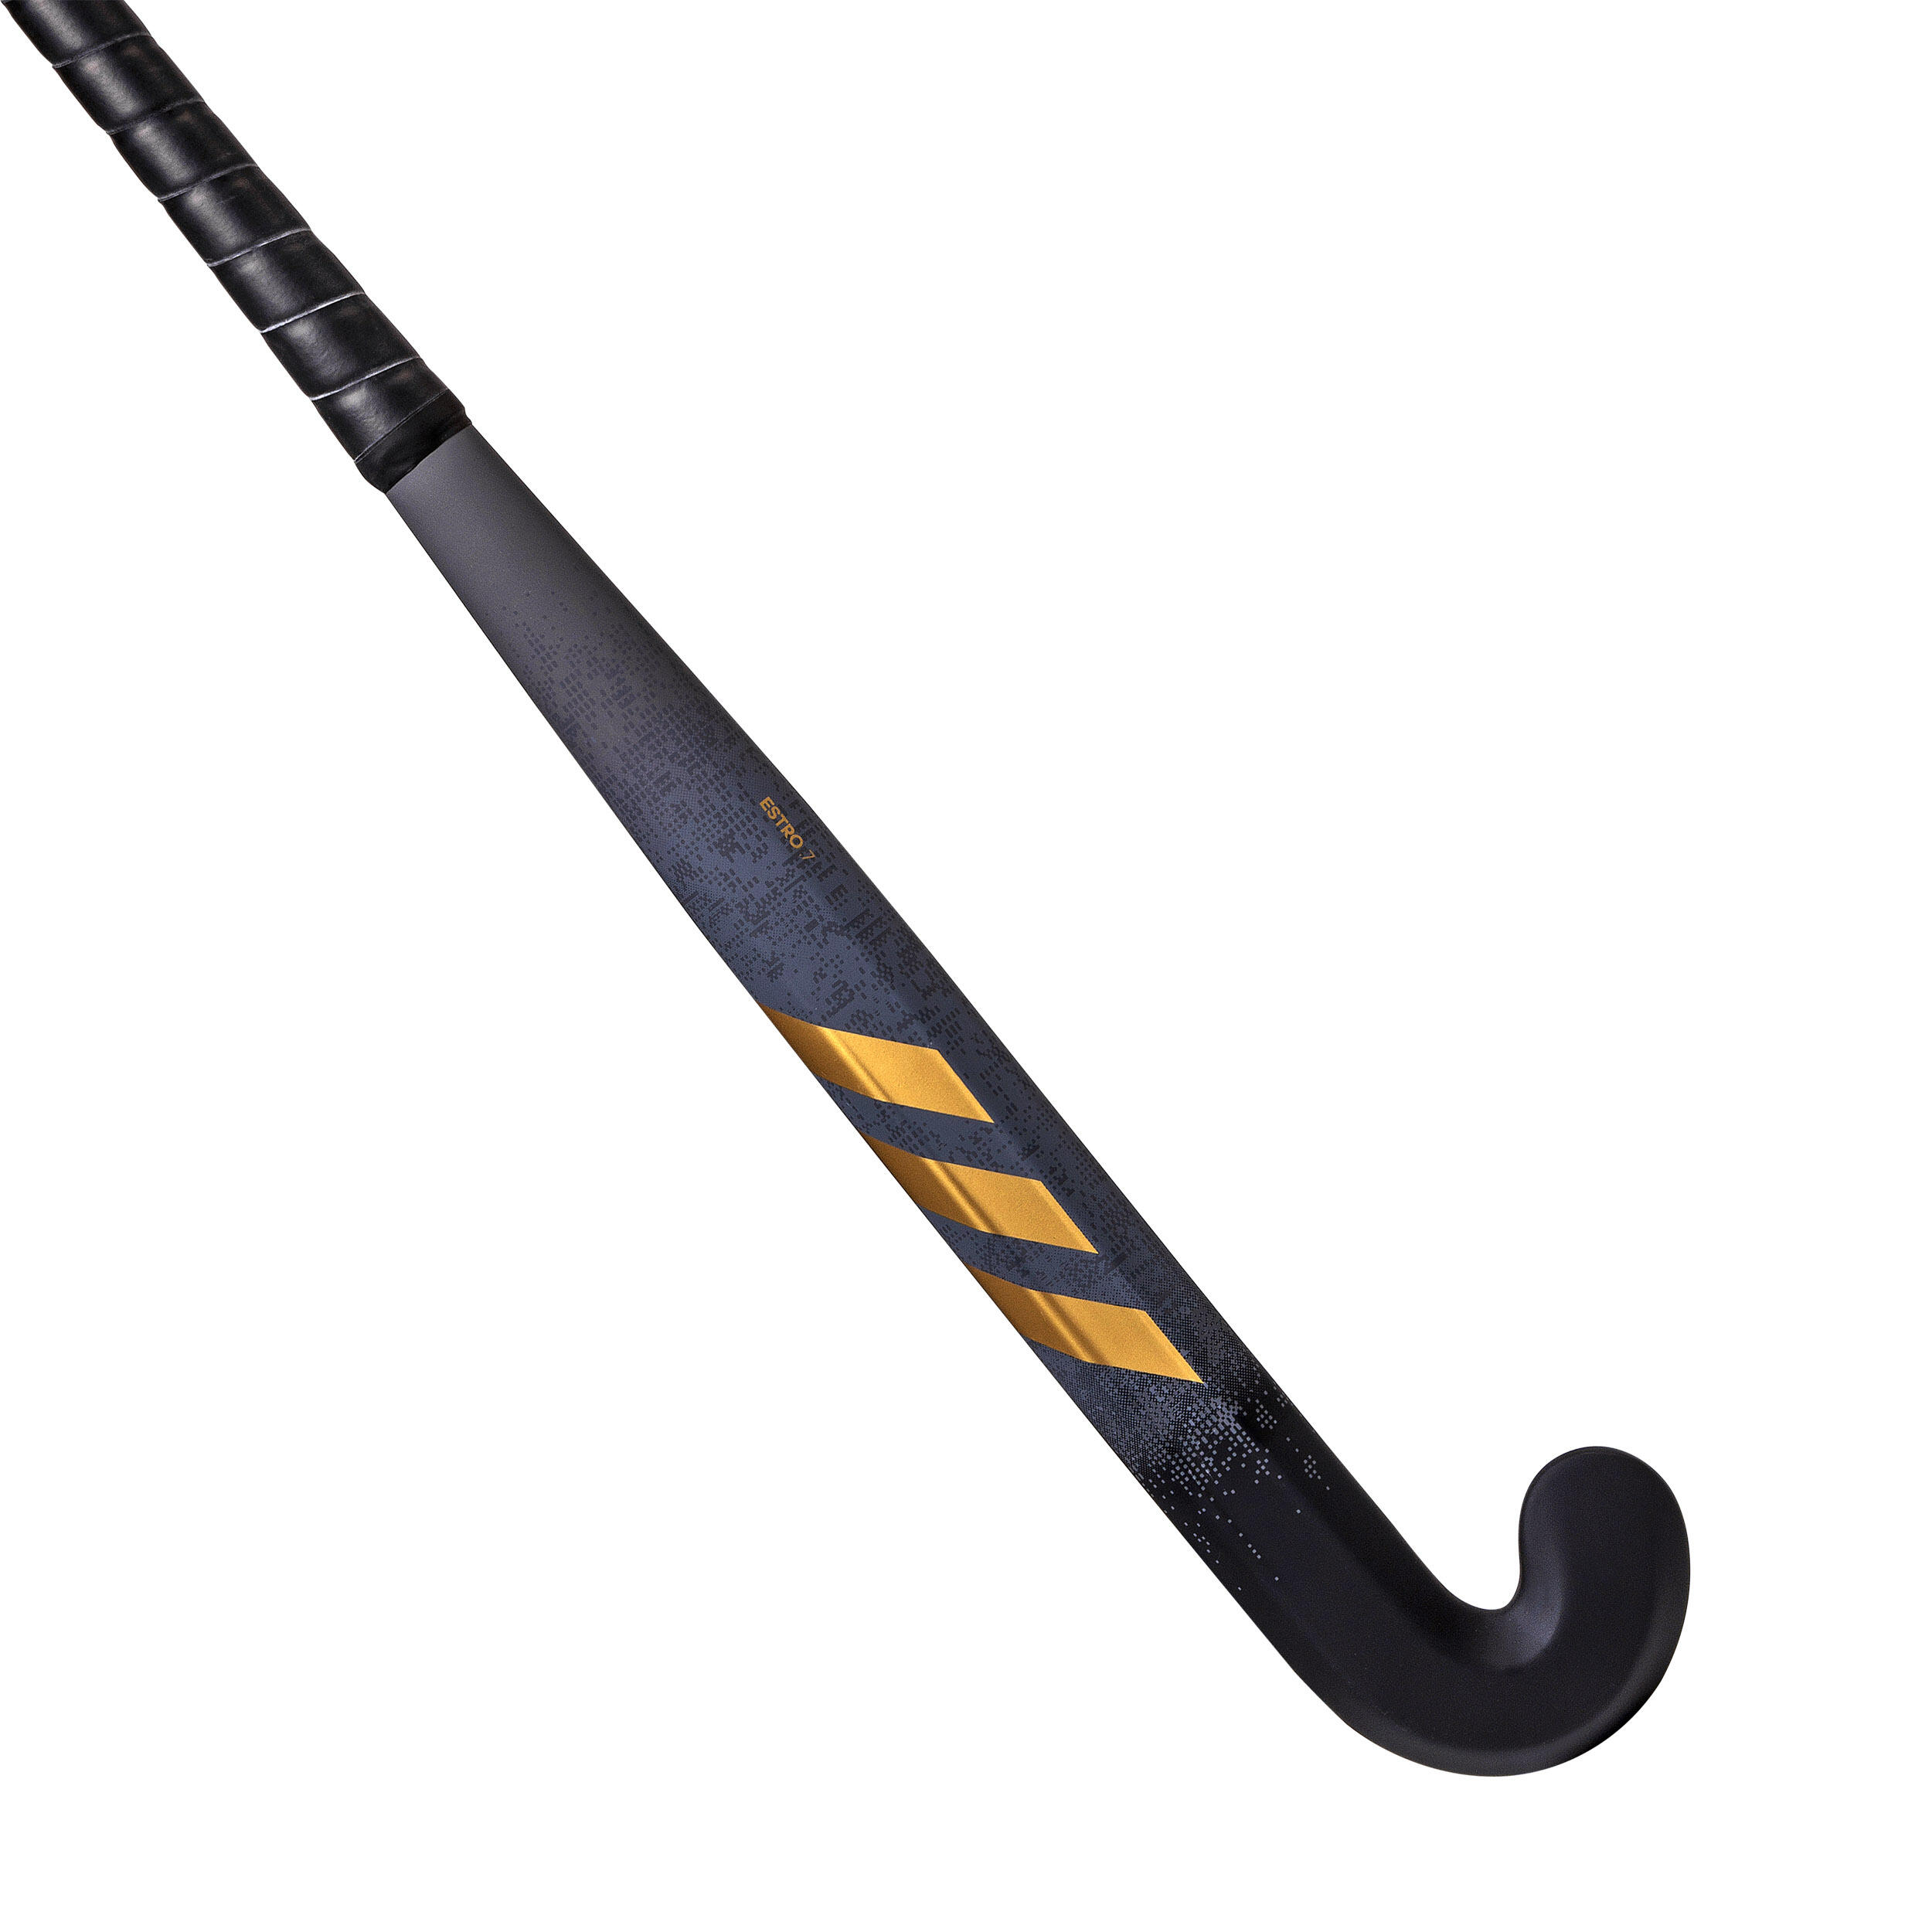 Adult Intermediate 20% Carbon Mid Bow Field Hockey Stick Estro .7 - Black/GoldBlack and gold 4/13